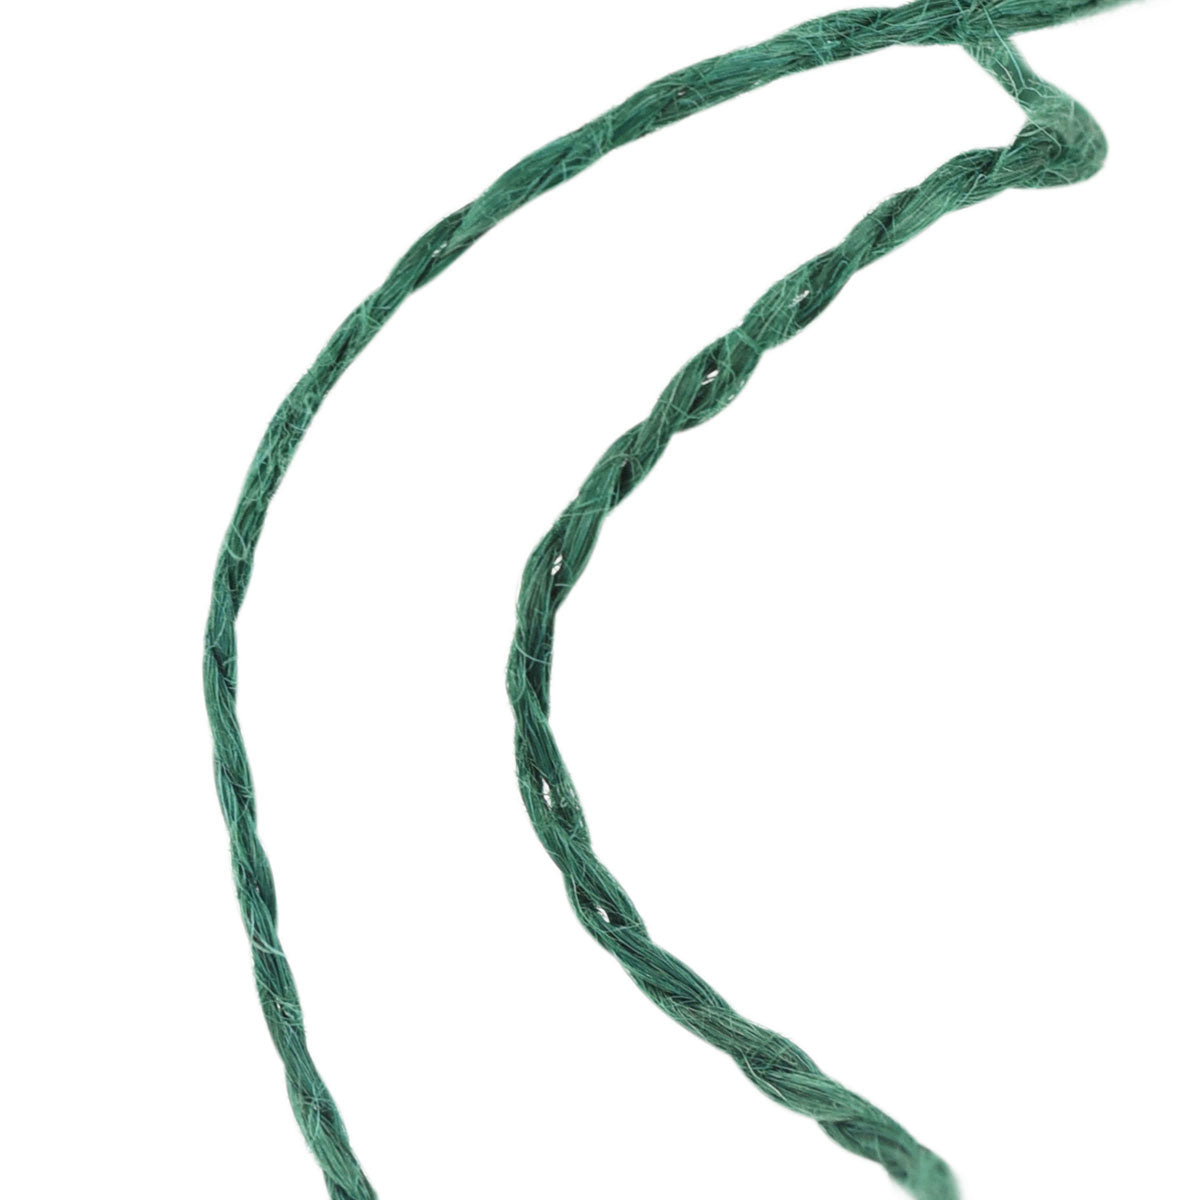 3-Pack of Natural Jute Twine Hemp Rope (98 Yards) Green